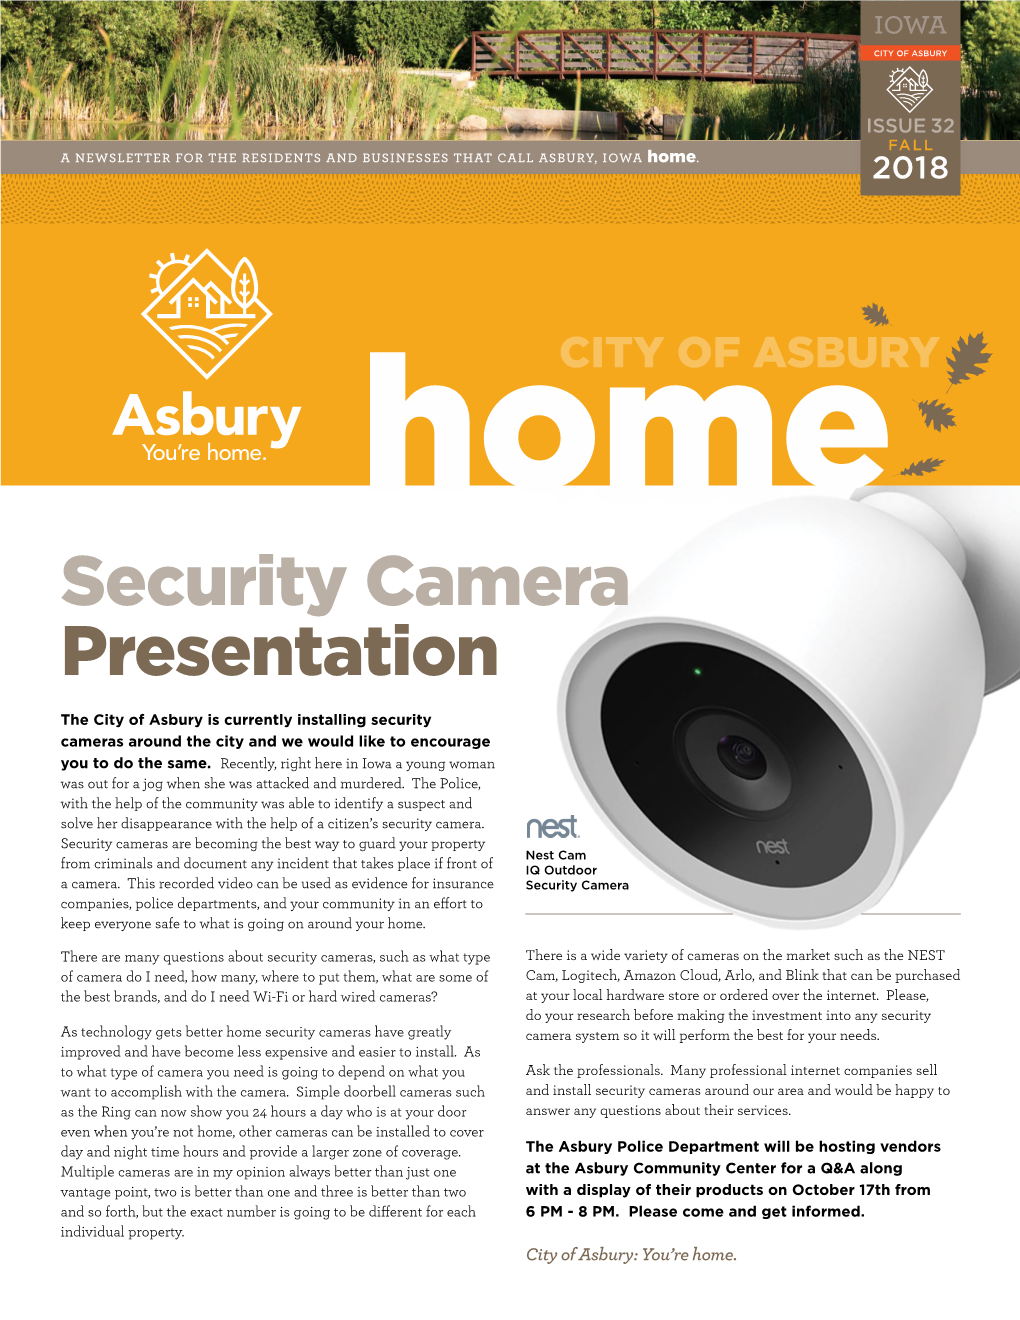 Security Camera Presentation